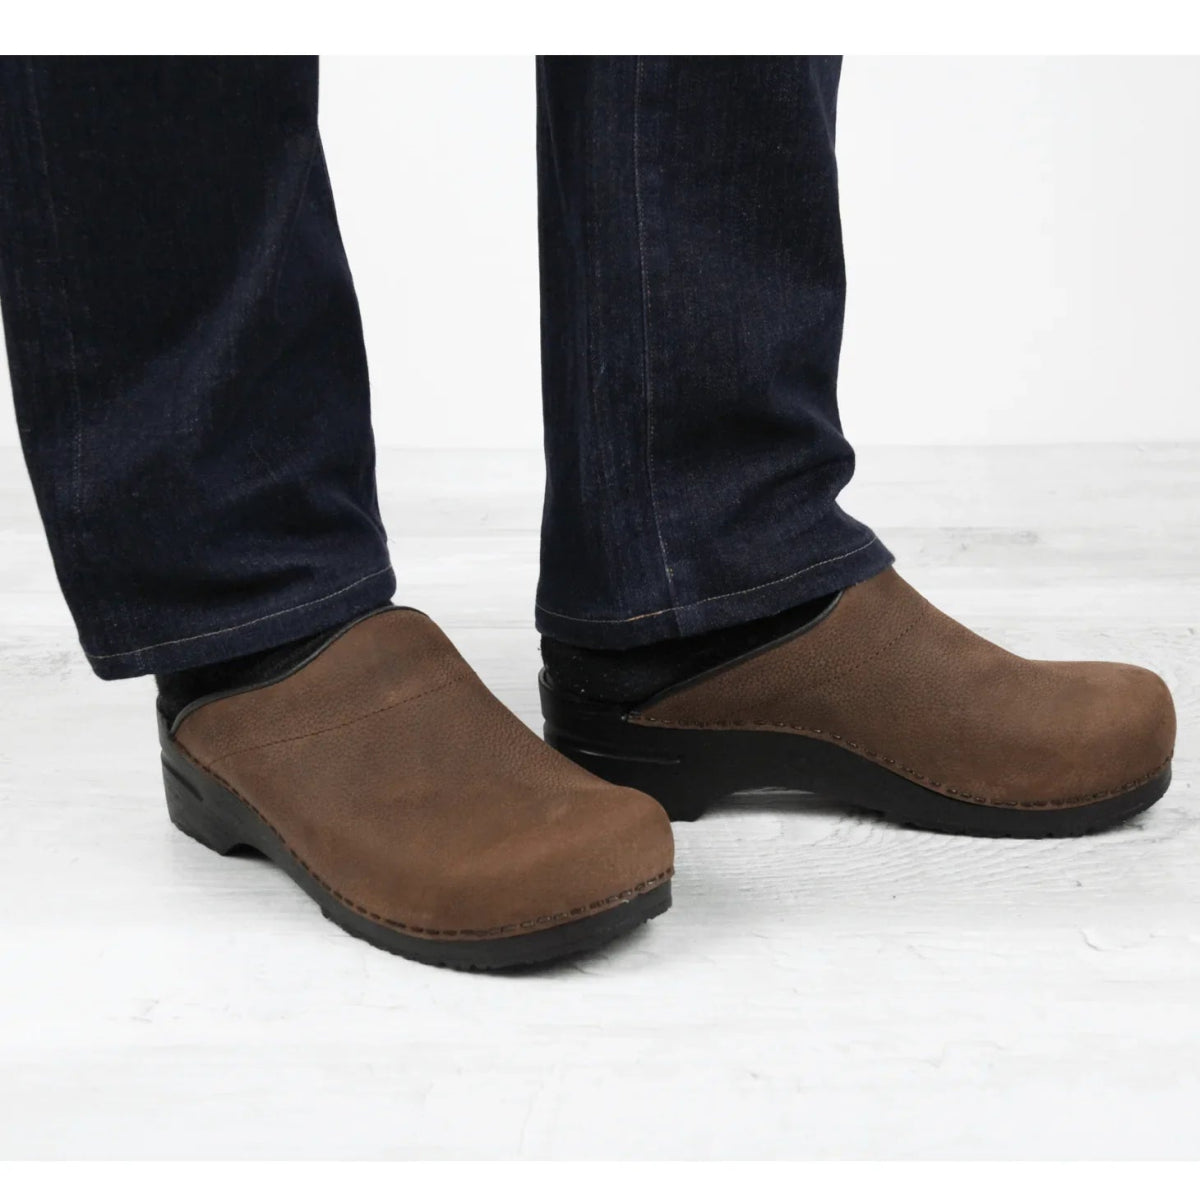 SANITA KARL TEXTURED OIL PROFESSIONAL MEN CLOG IN ANTIQUE BROWN - TLW Shoes